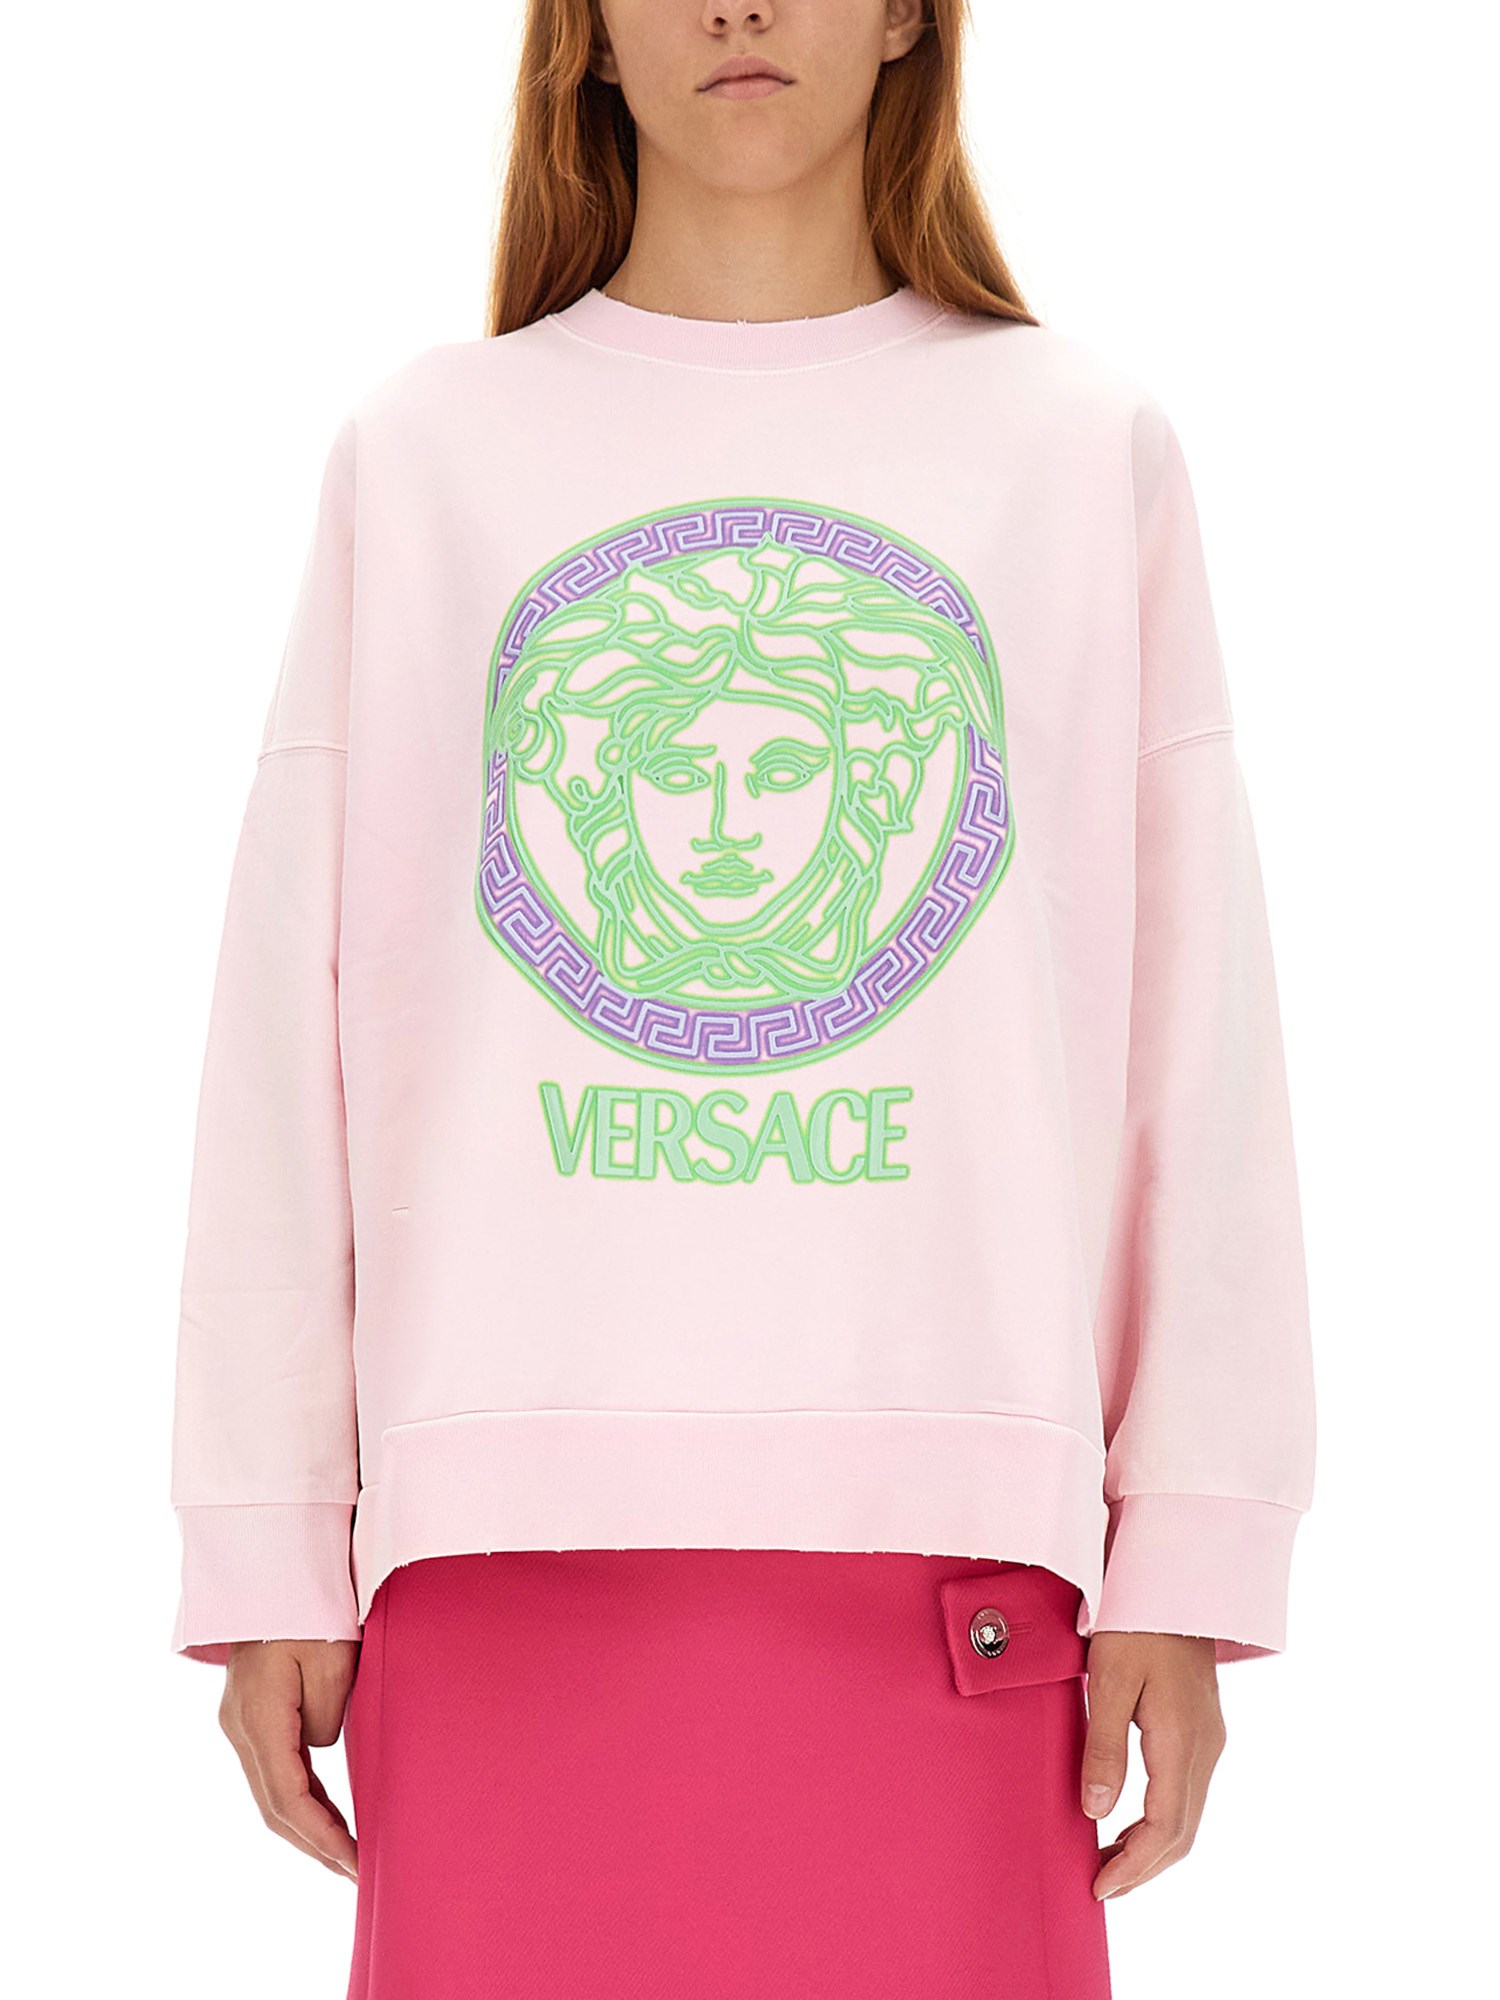 versace sweatshirt with medusa logo